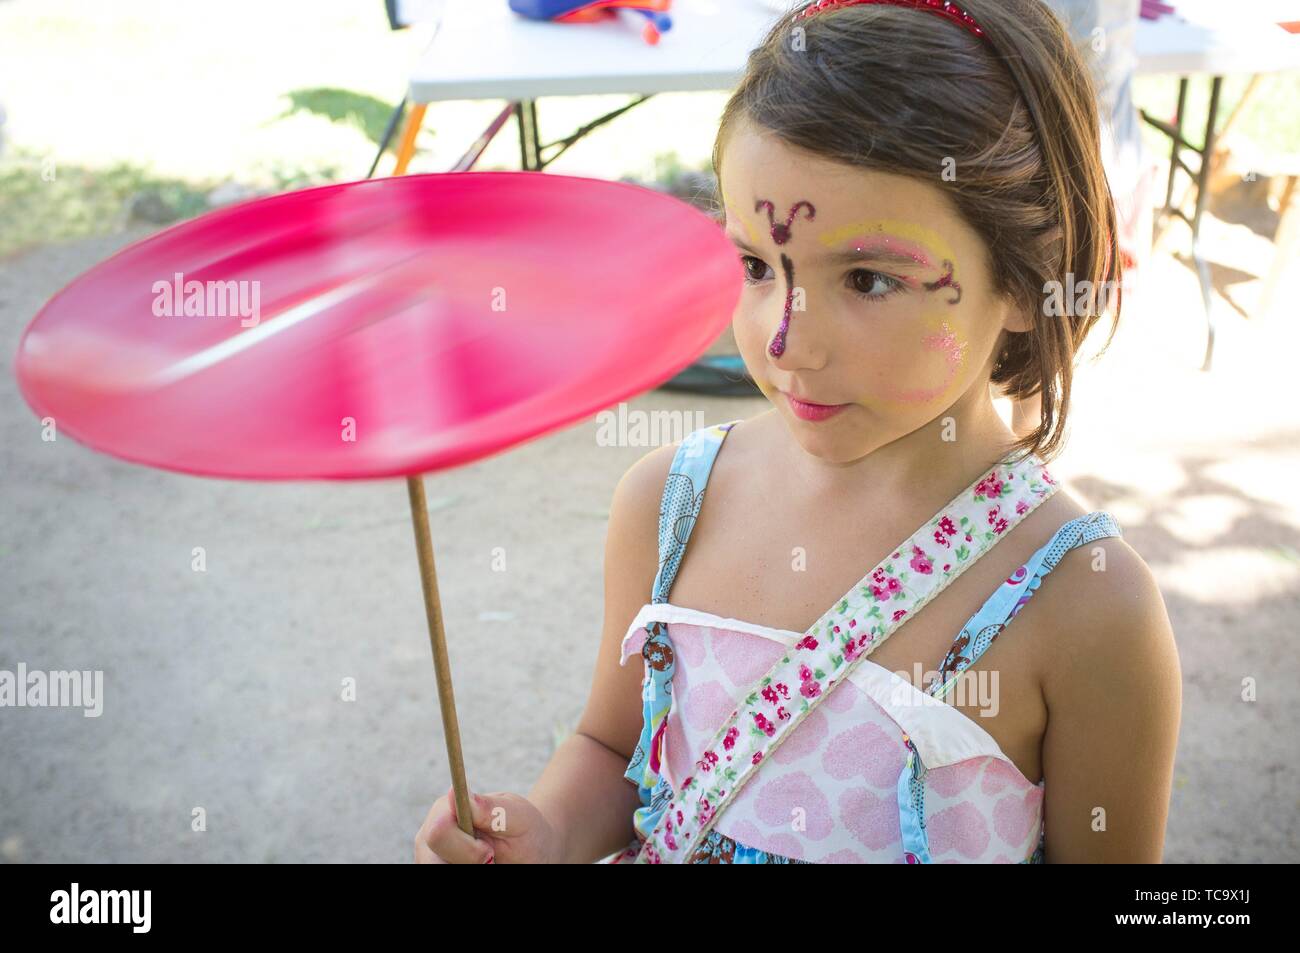 Cara pintada niño niña jugando con placa de hilado. Concepto de juguetes clásicos. Foto de stock